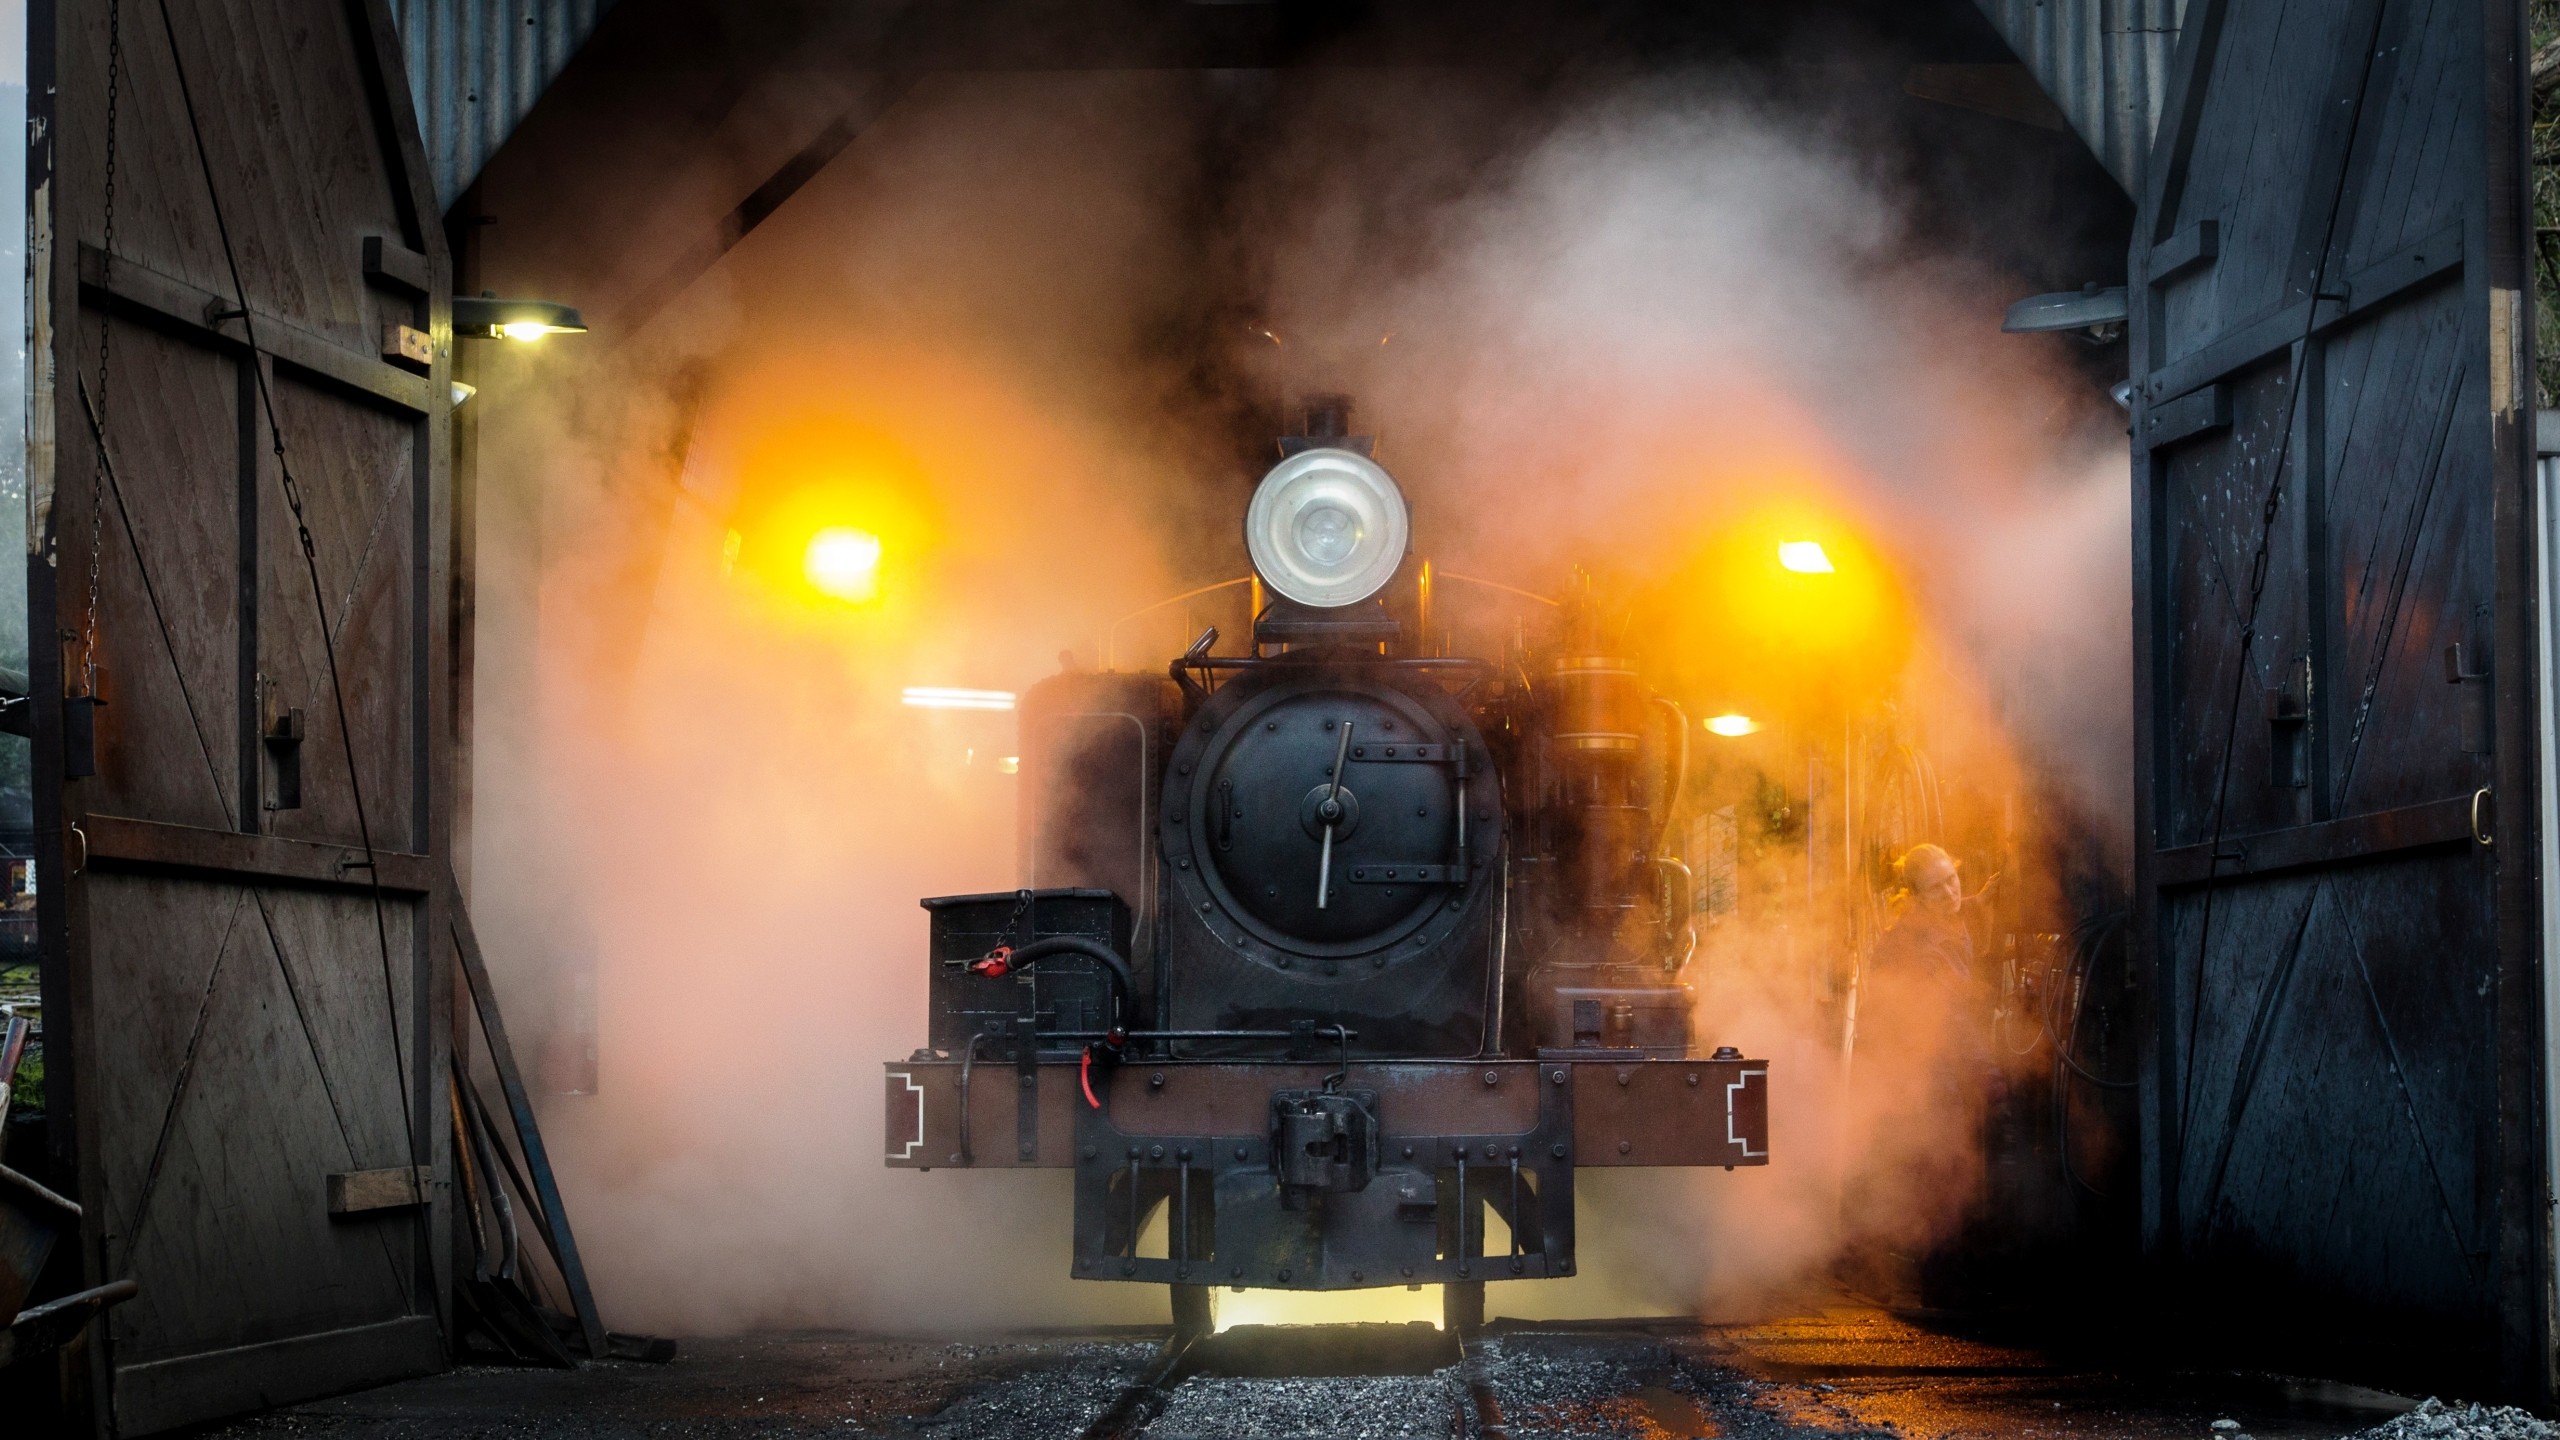 General 2560x1440 vehicle train steam locomotive locomotive smoke